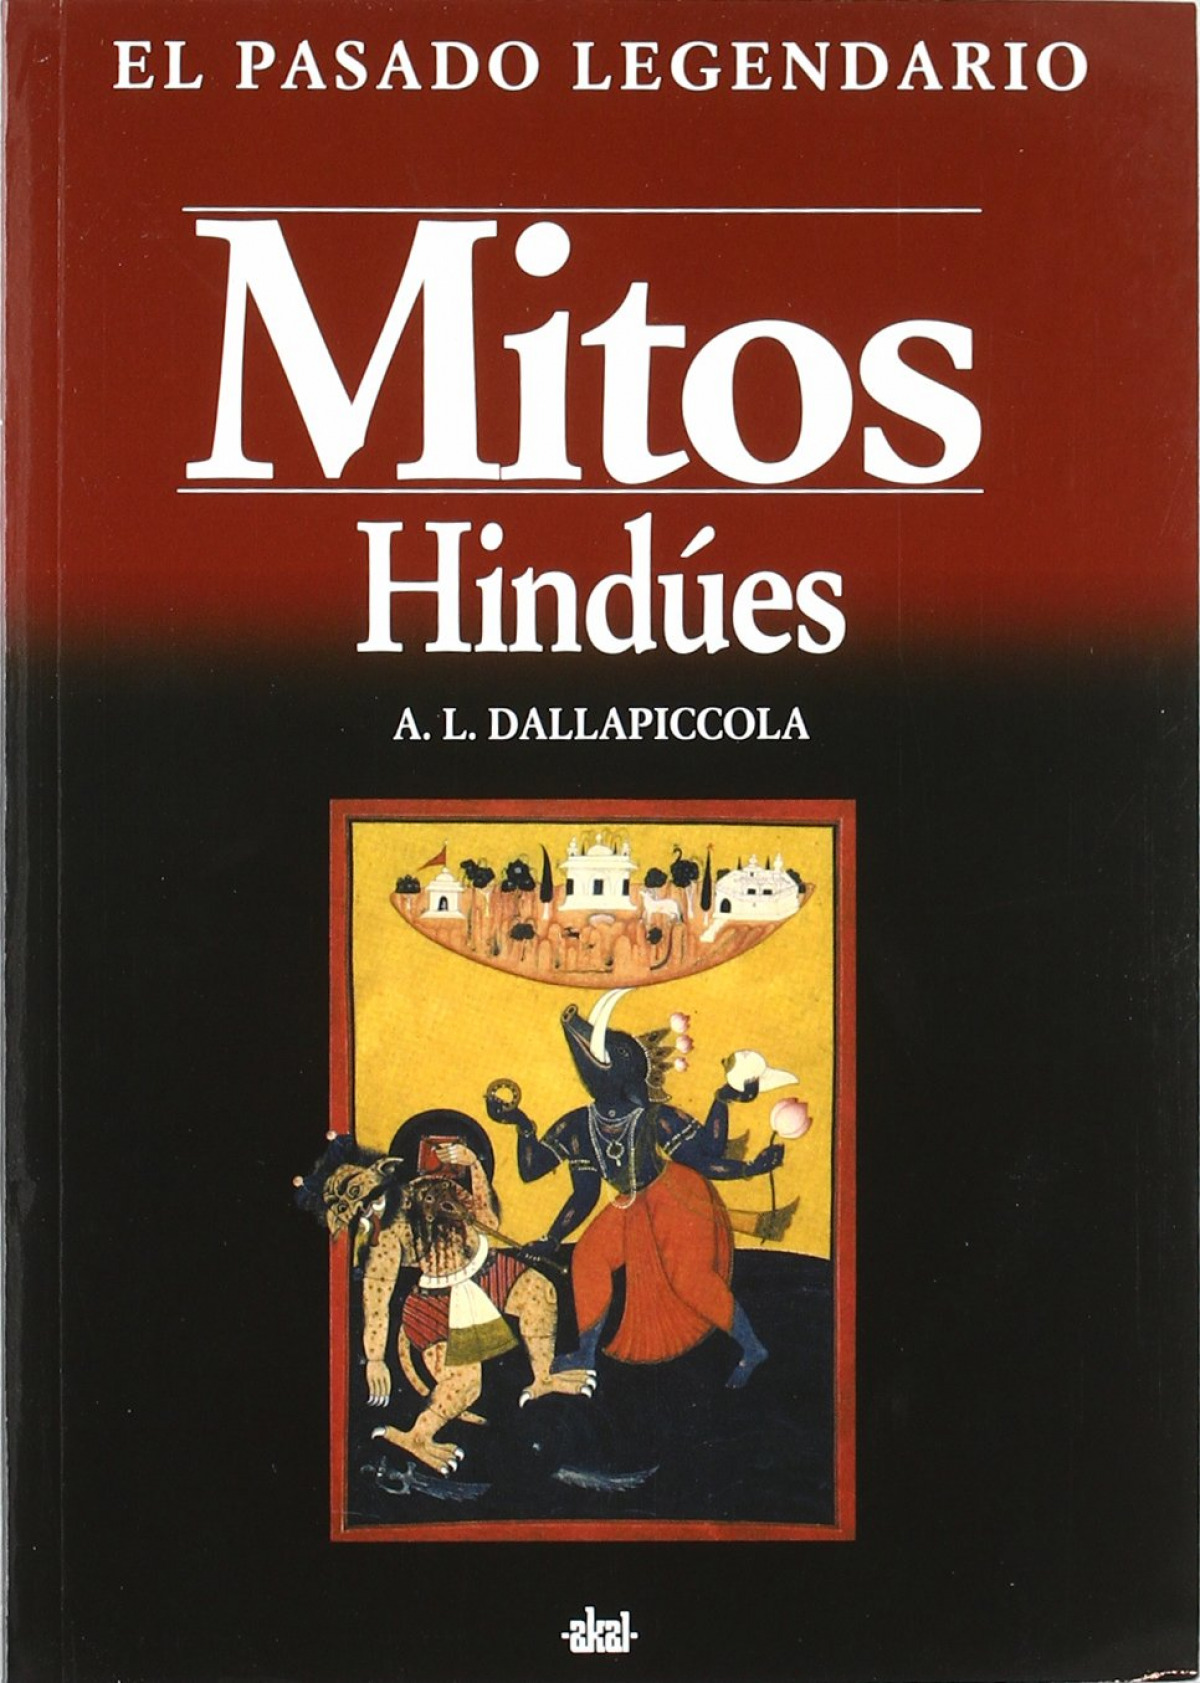 Mitos hindues - Dallapiccola, Anna